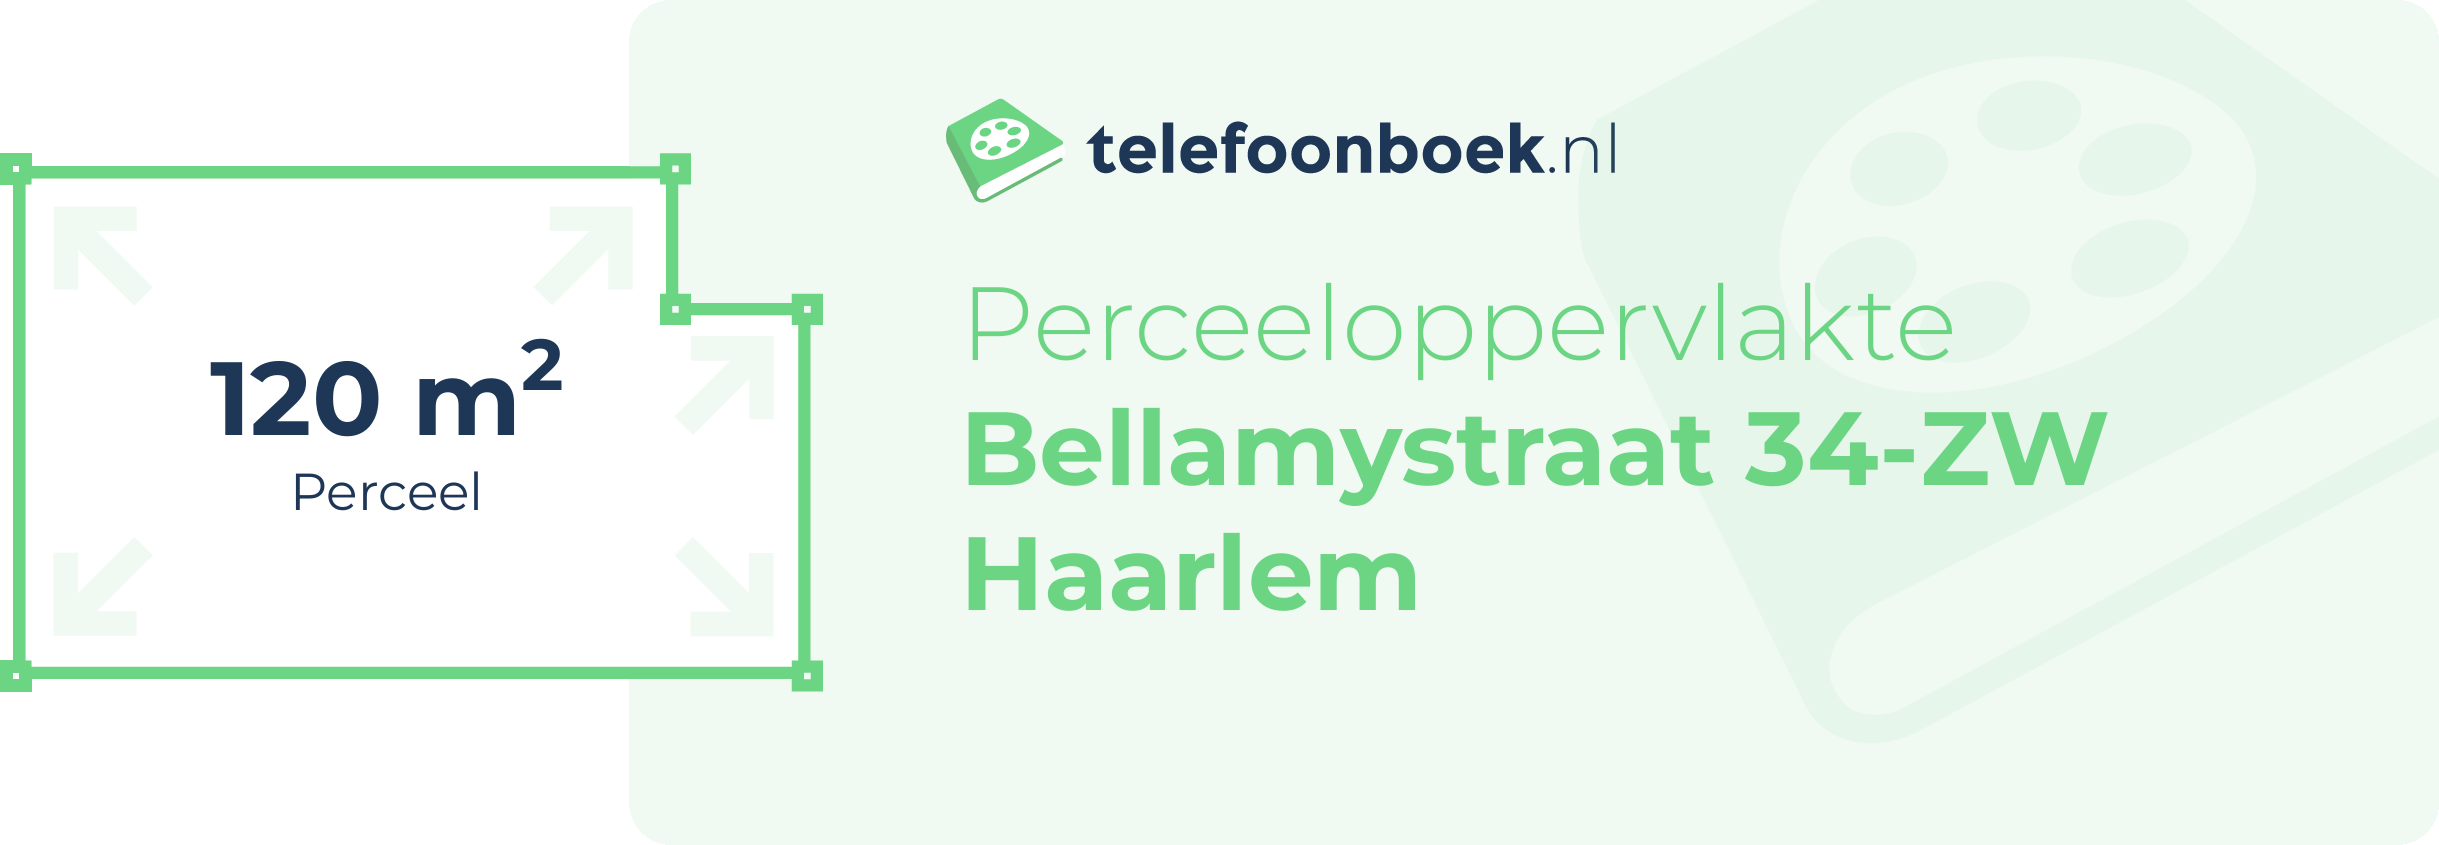 Perceeloppervlakte Bellamystraat 34-ZW Haarlem